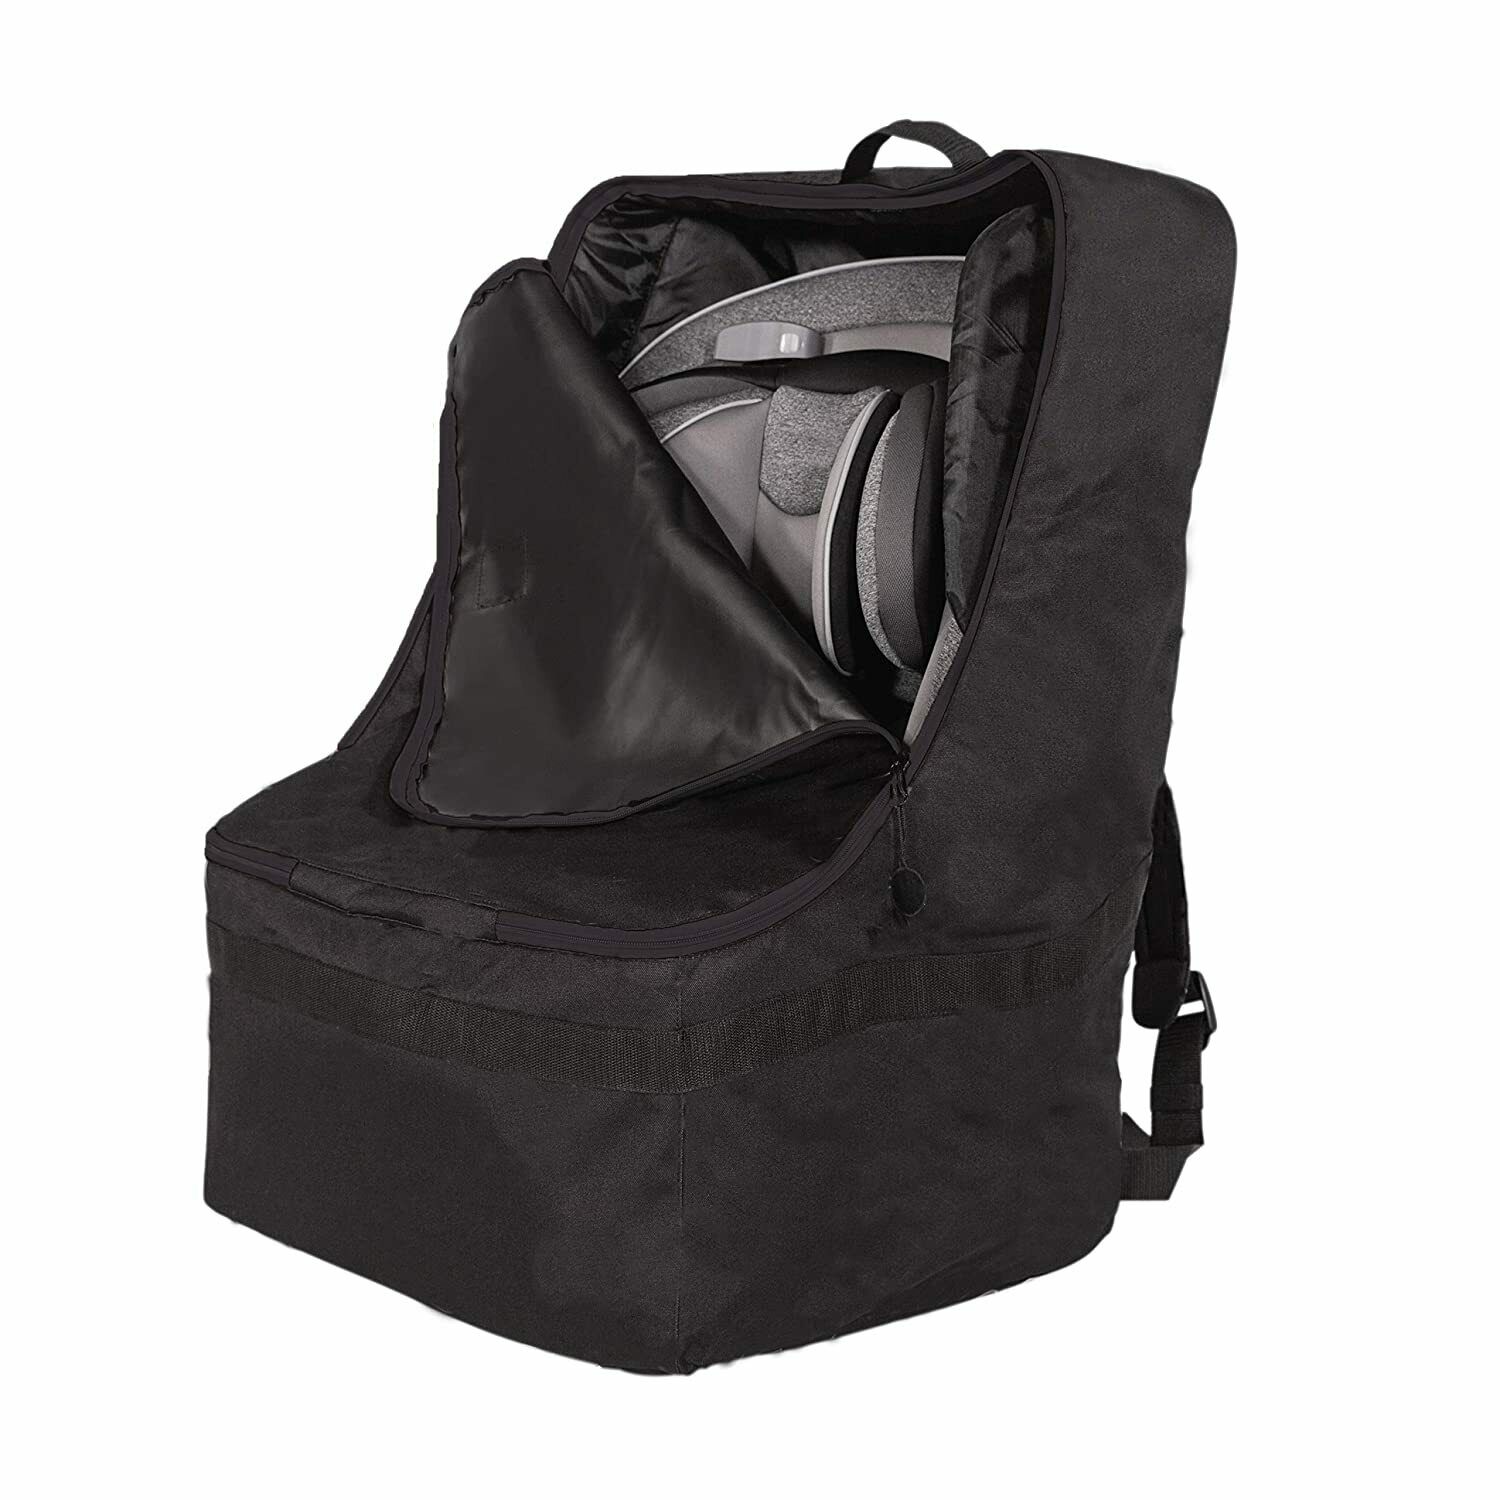 J.l. Childress Ultimate Backpack Padded Car Seat Travel Bag Car Seat Cover Black